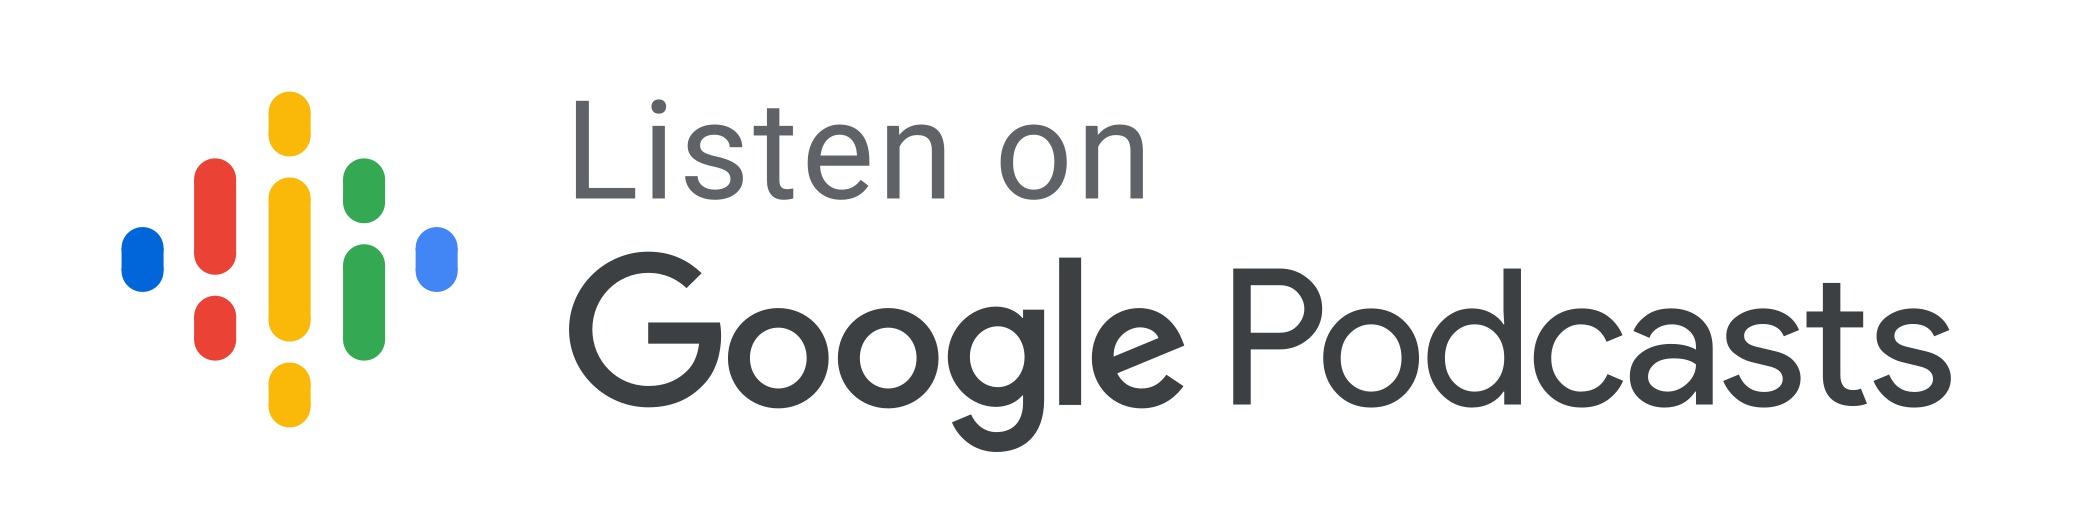 listen-on-google-podcasts-logo-1